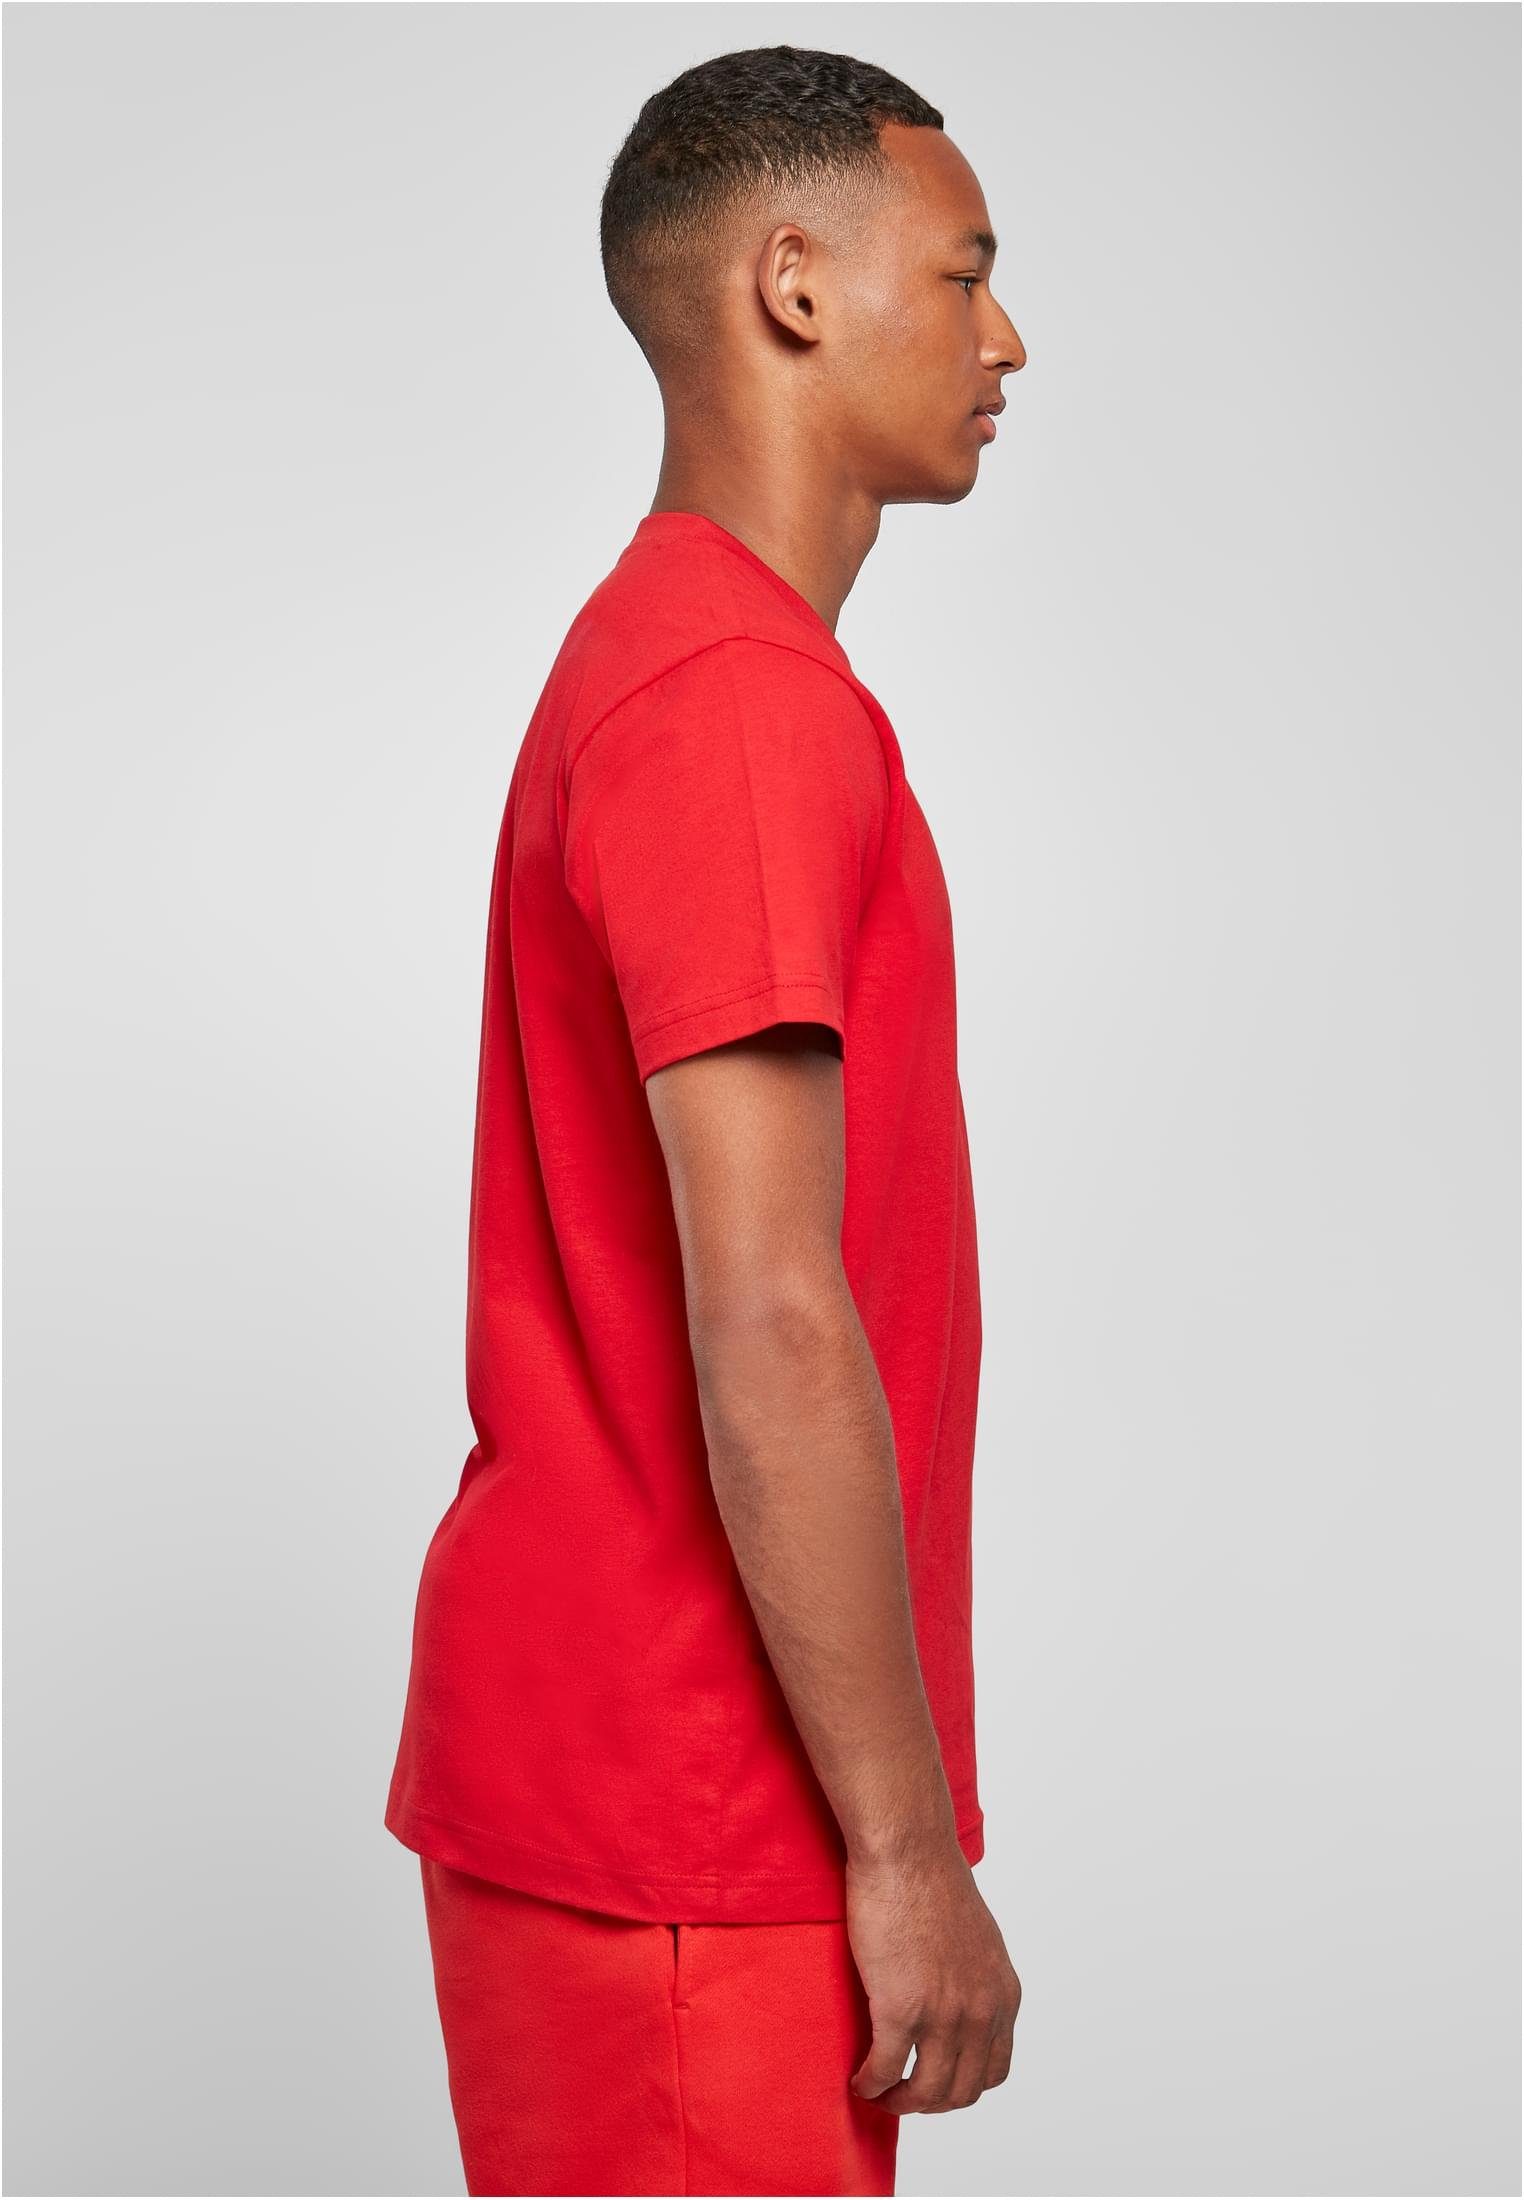 Starter (1-tlg) Herren Jersey cityred T-Shirt Starter Essential